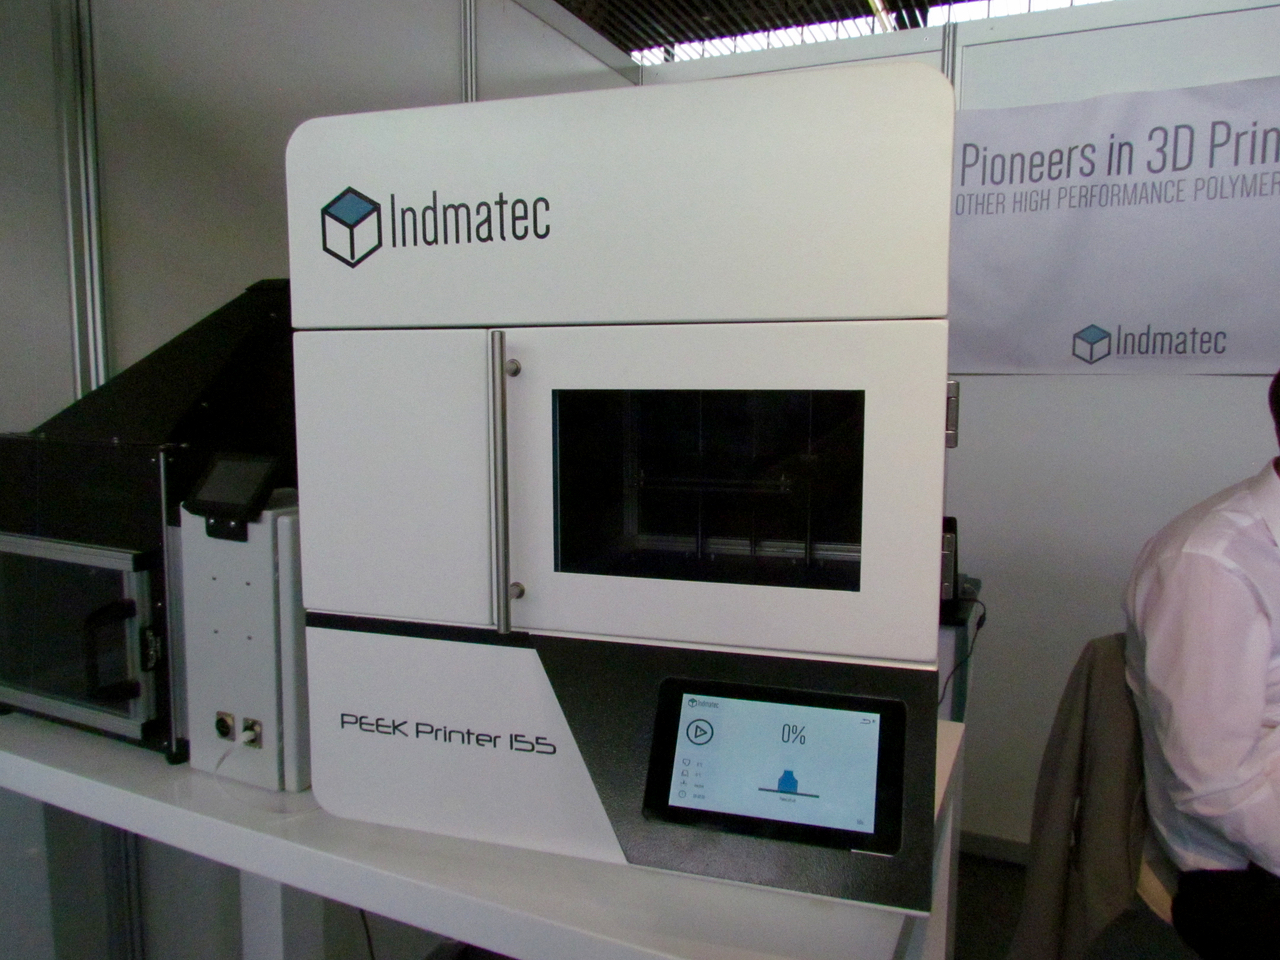  The Indmatec PEEK Printer 155 